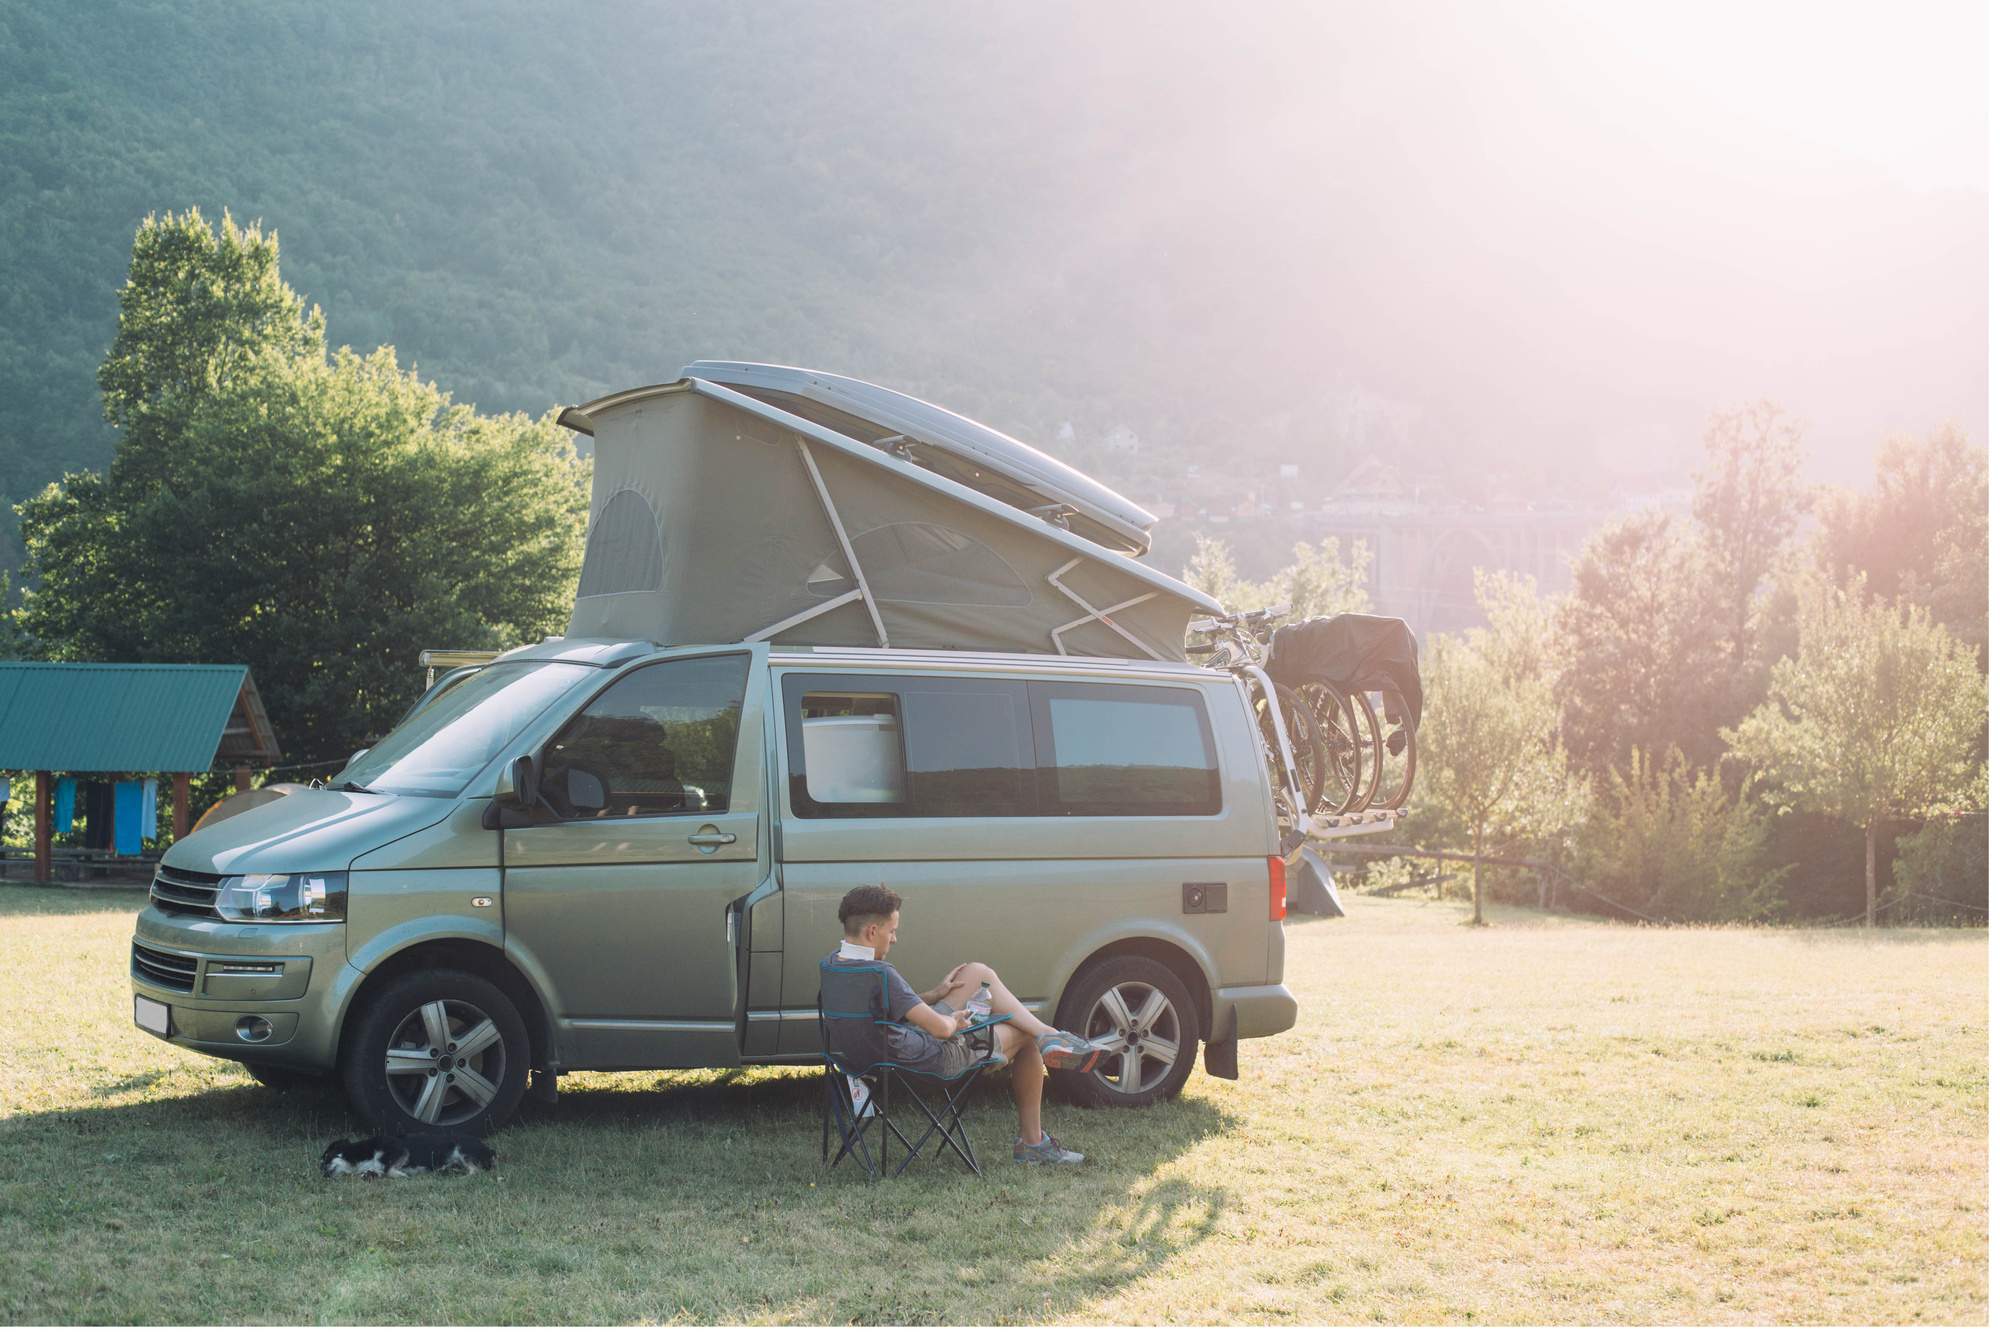 Should You Get an RV or Camper Van?